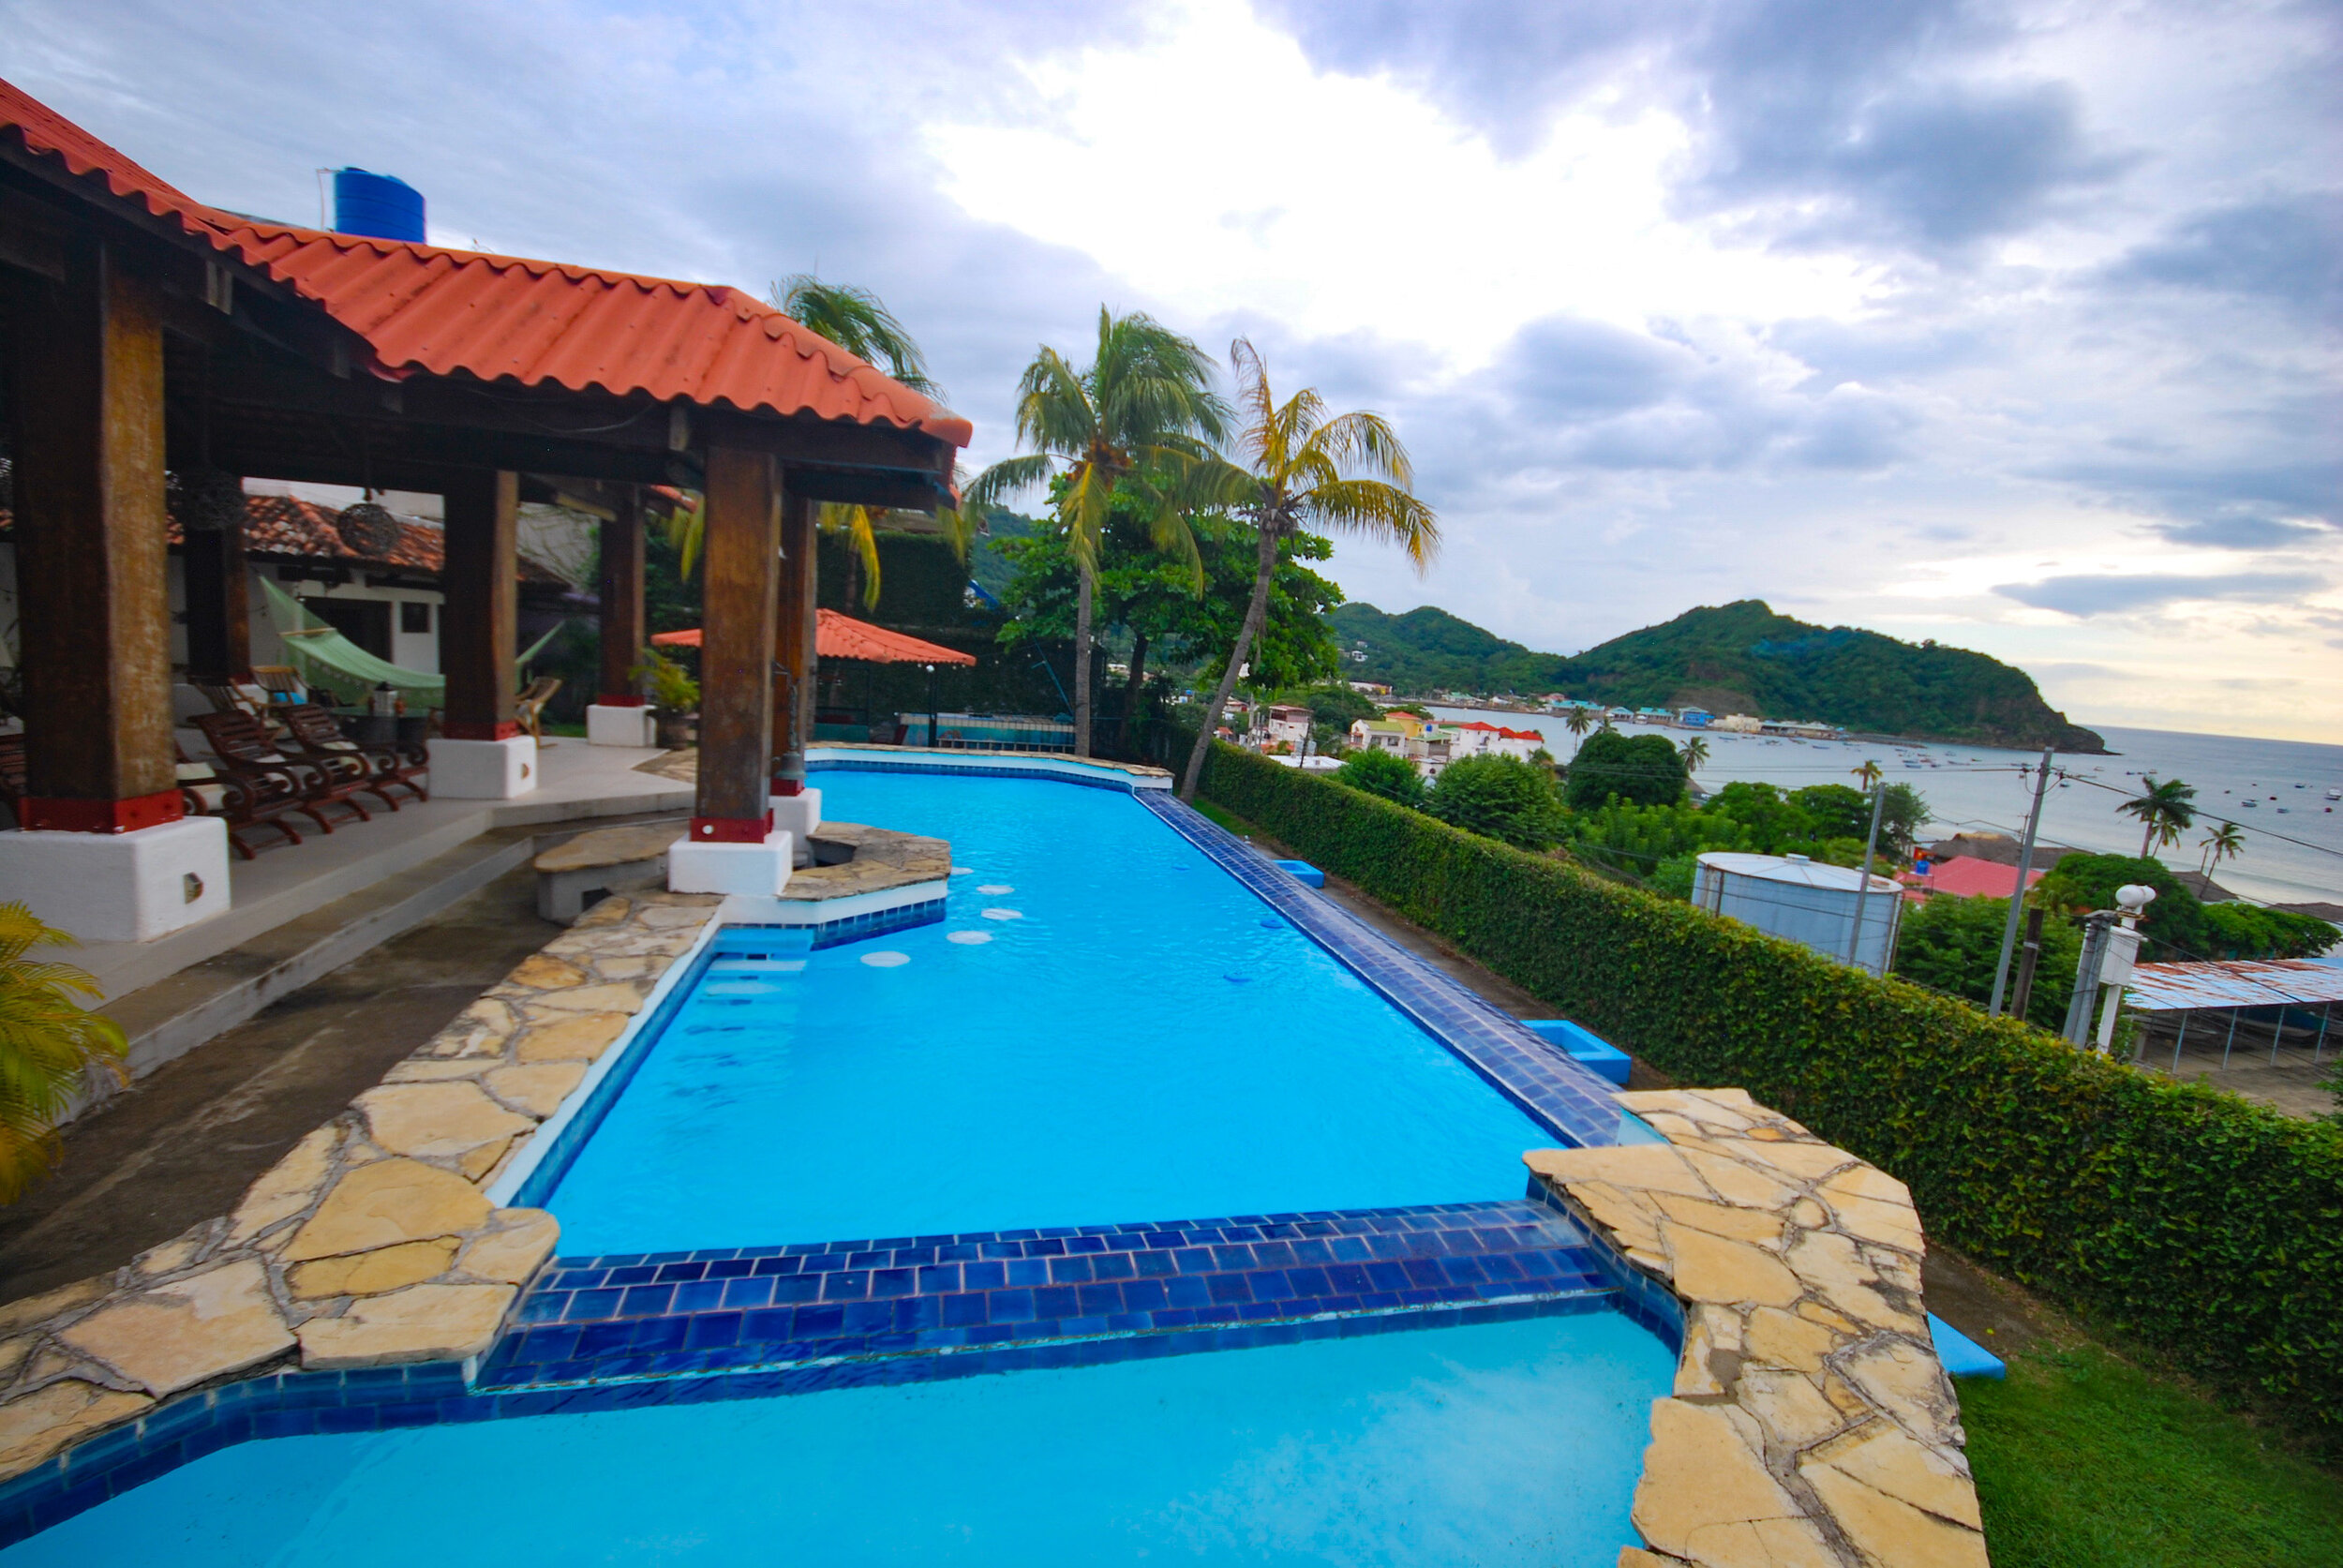 Hotel Resort For Sale San Juan Del Sur Nicaragua 31.JPEG